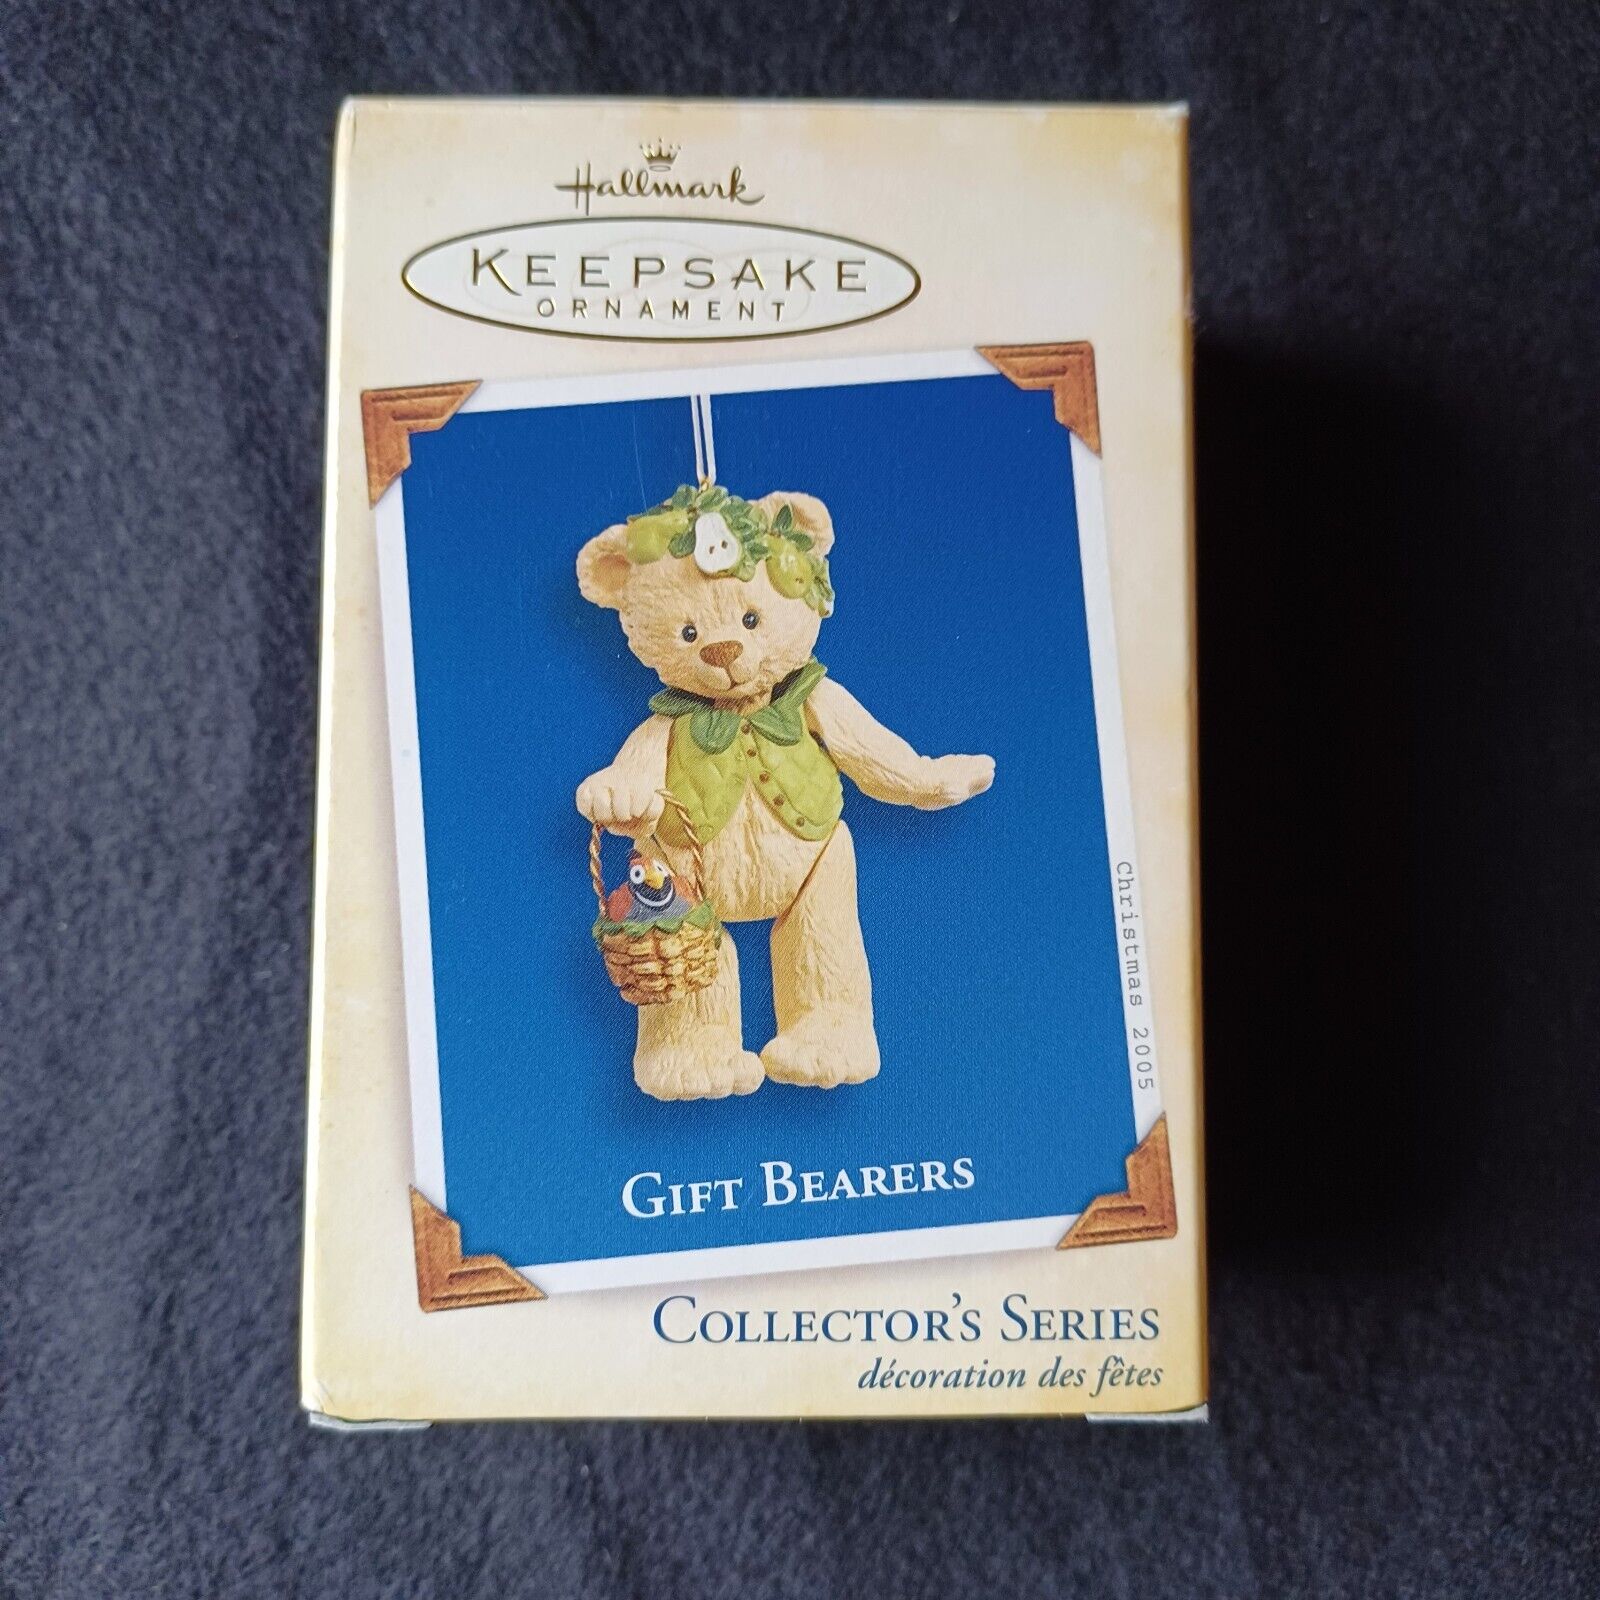 2005 Hallmark Keepsake Gift Bearers Teddy Bear Series Ornament